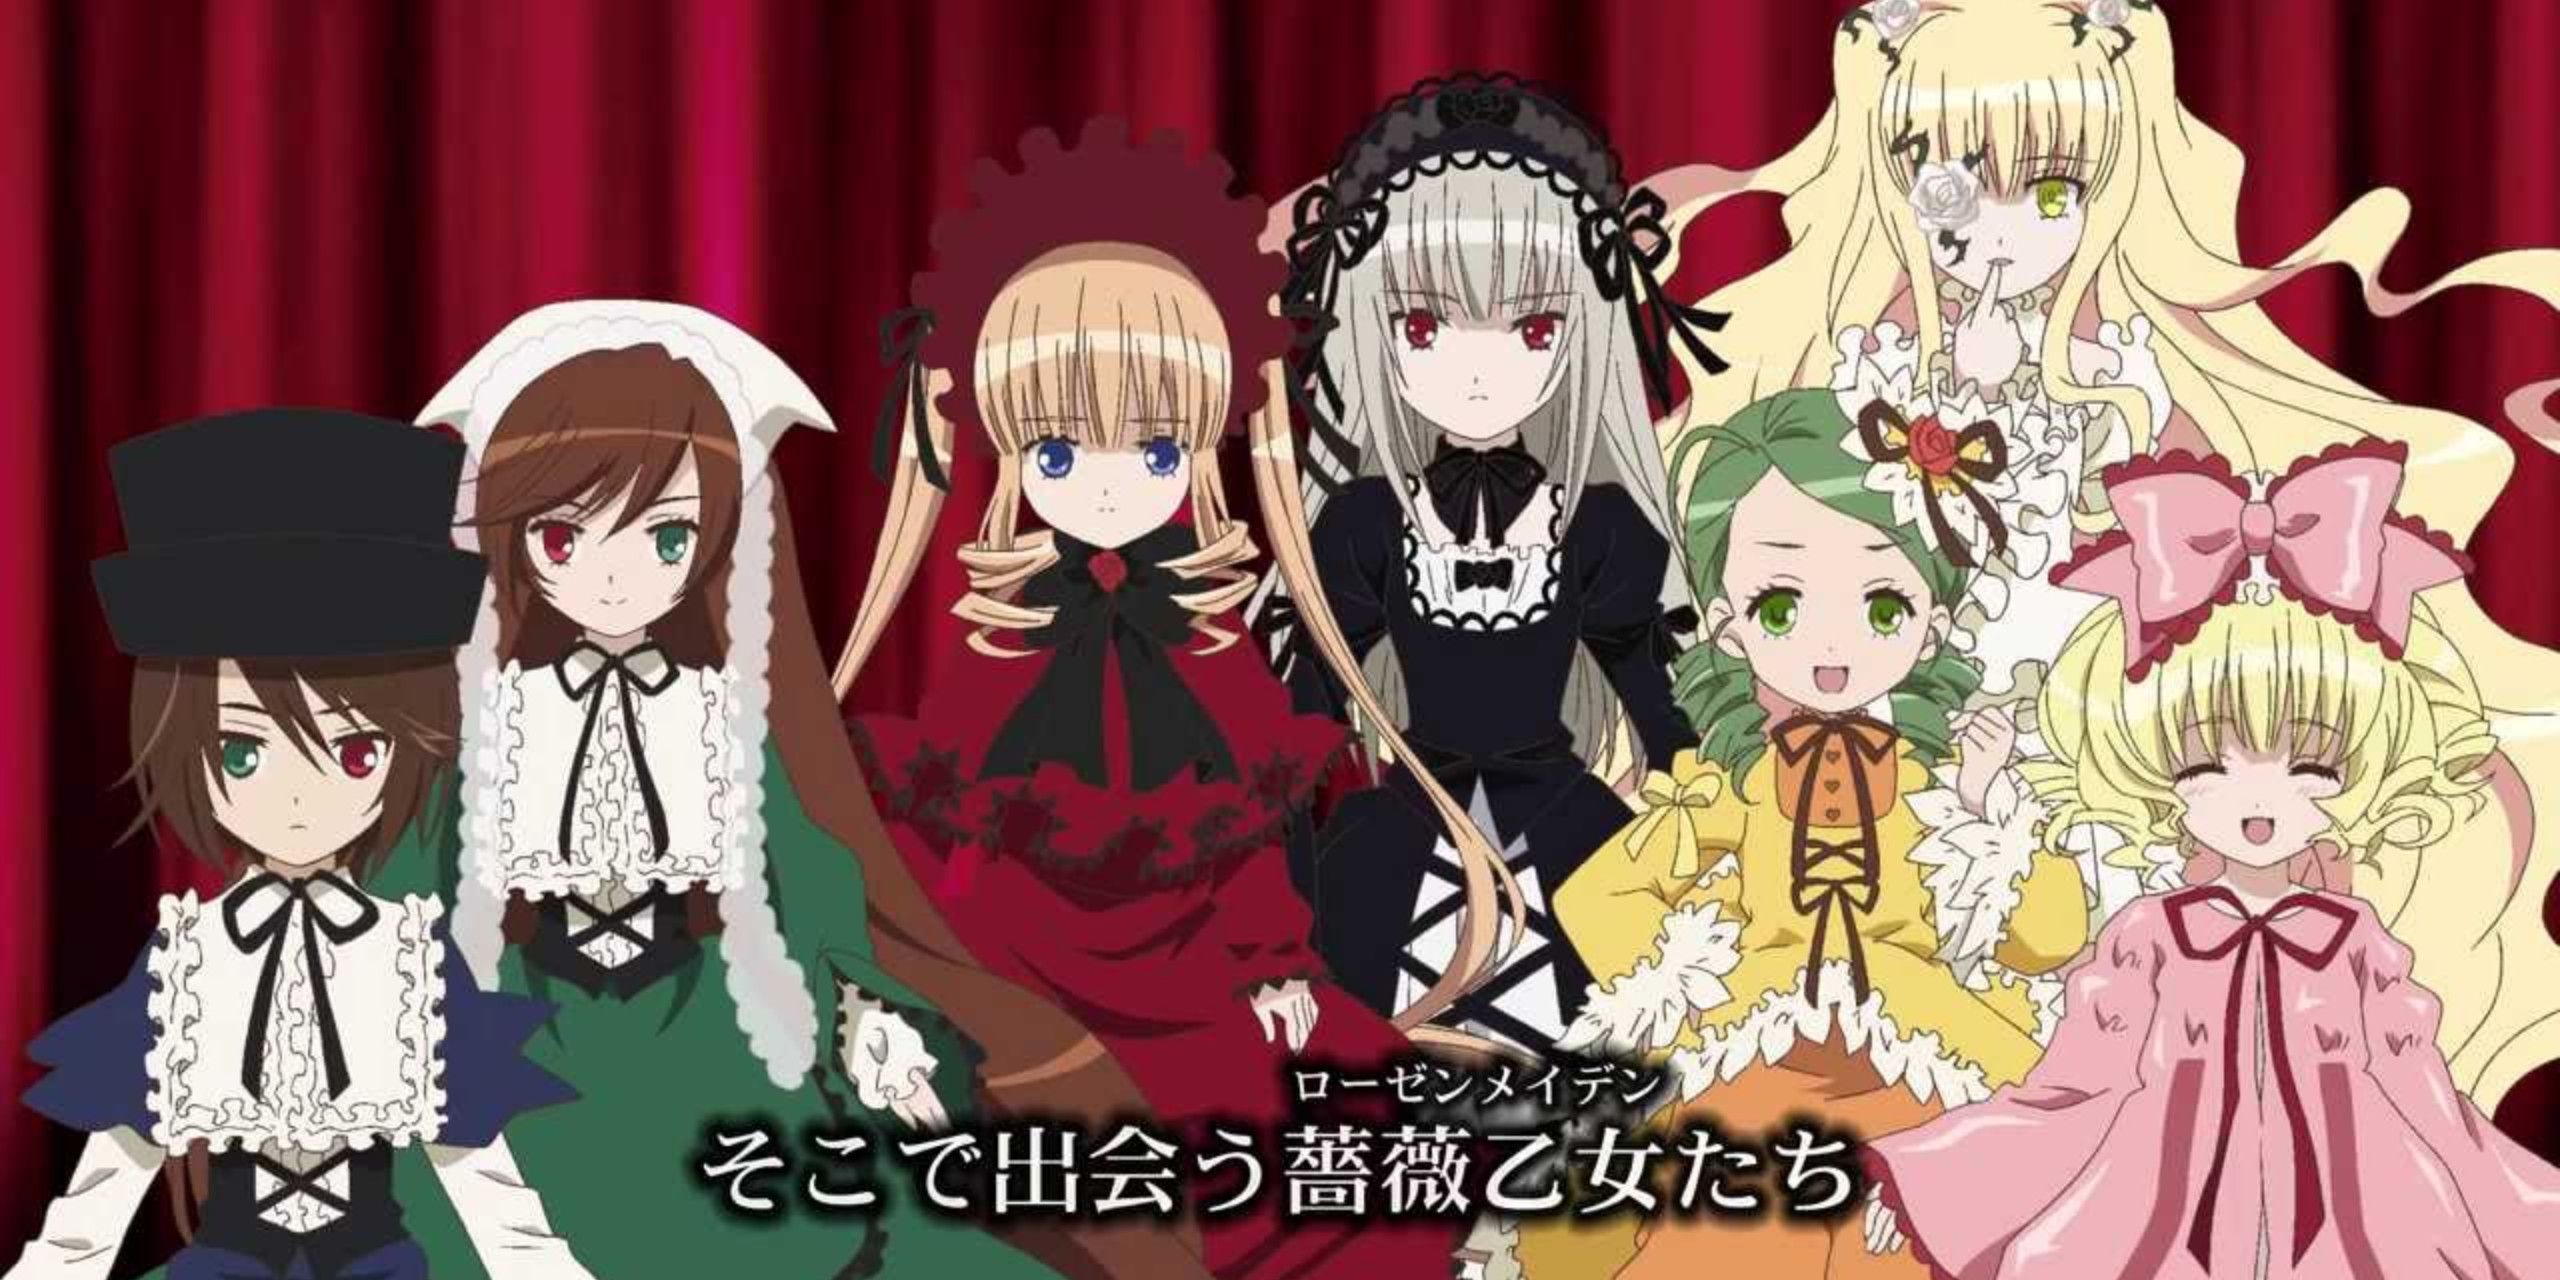 The 7 candidates of the Alice Games from left to right: Souseisek, Suiseiseki, Shinku, Suigintou, Kanaria, Hinaichigo (front) and Kirakishou (back)